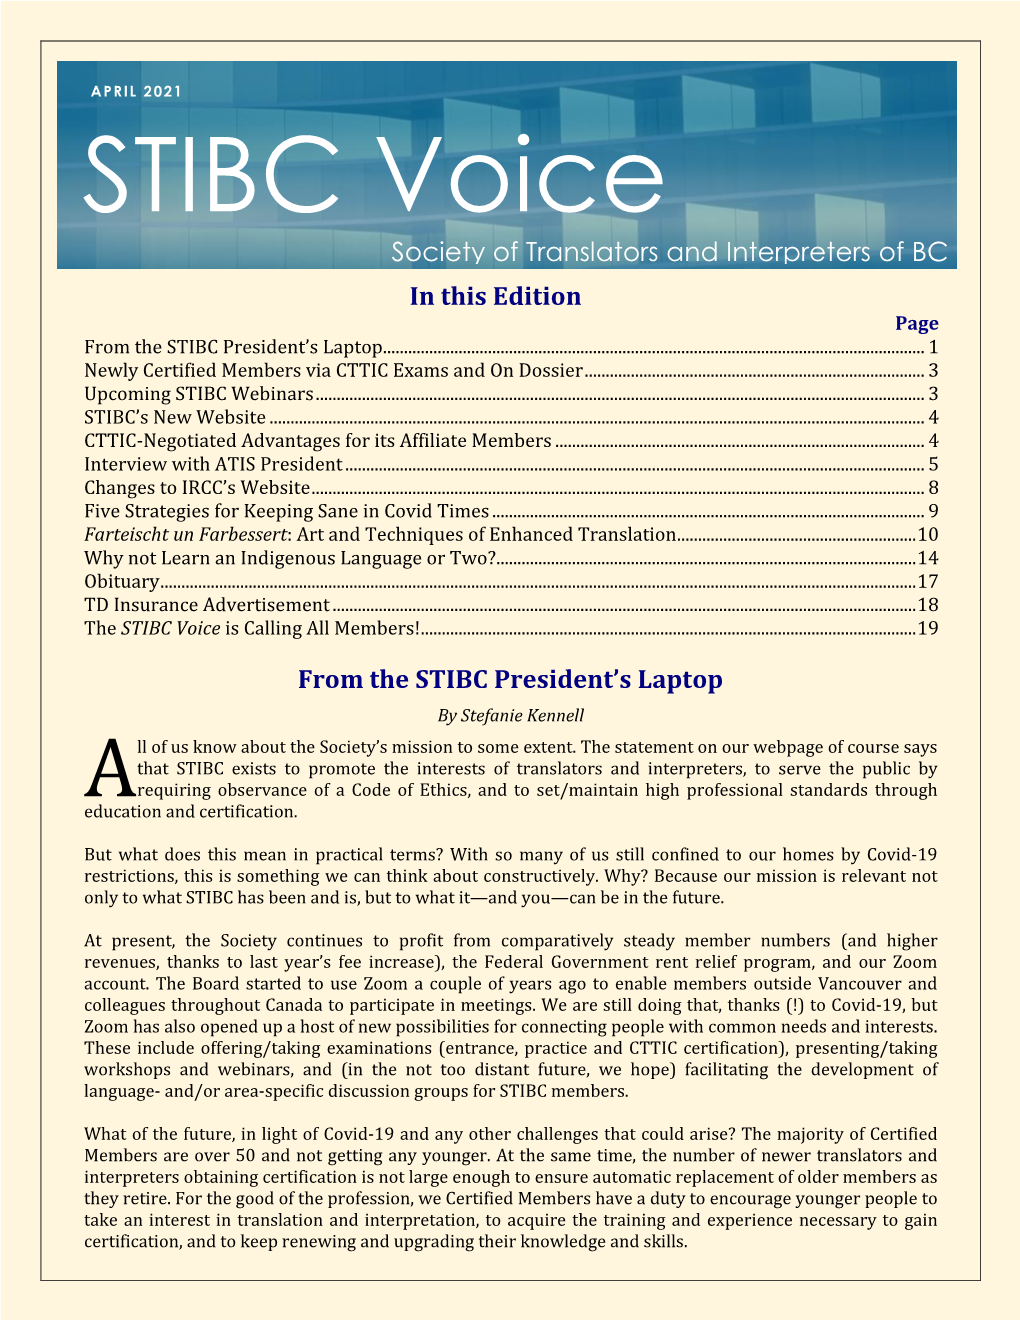 STIBC Voice Society of Translators and Interpreters of BC